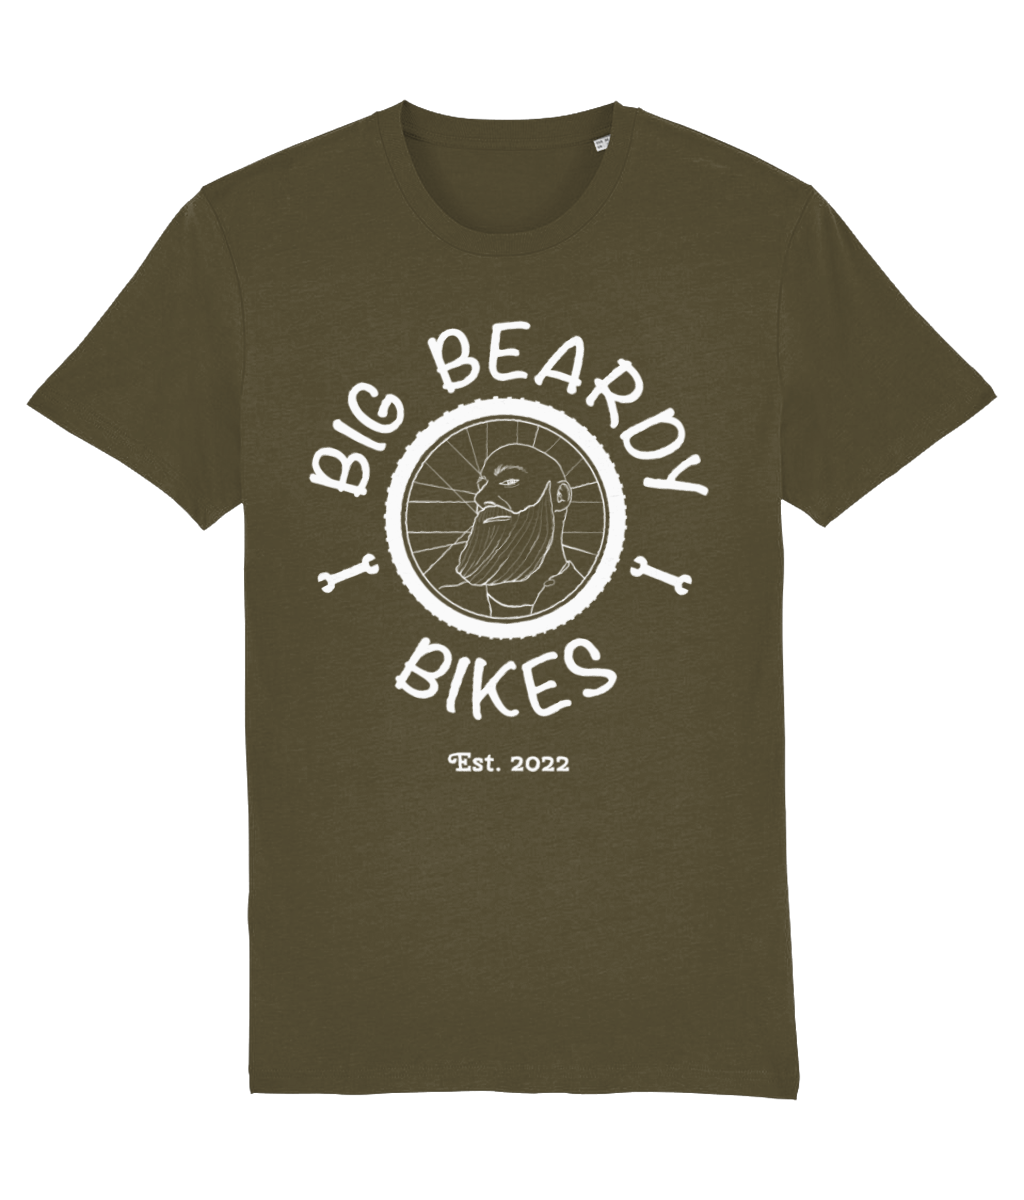 Big beardy bikes tee shirt khaki white logo